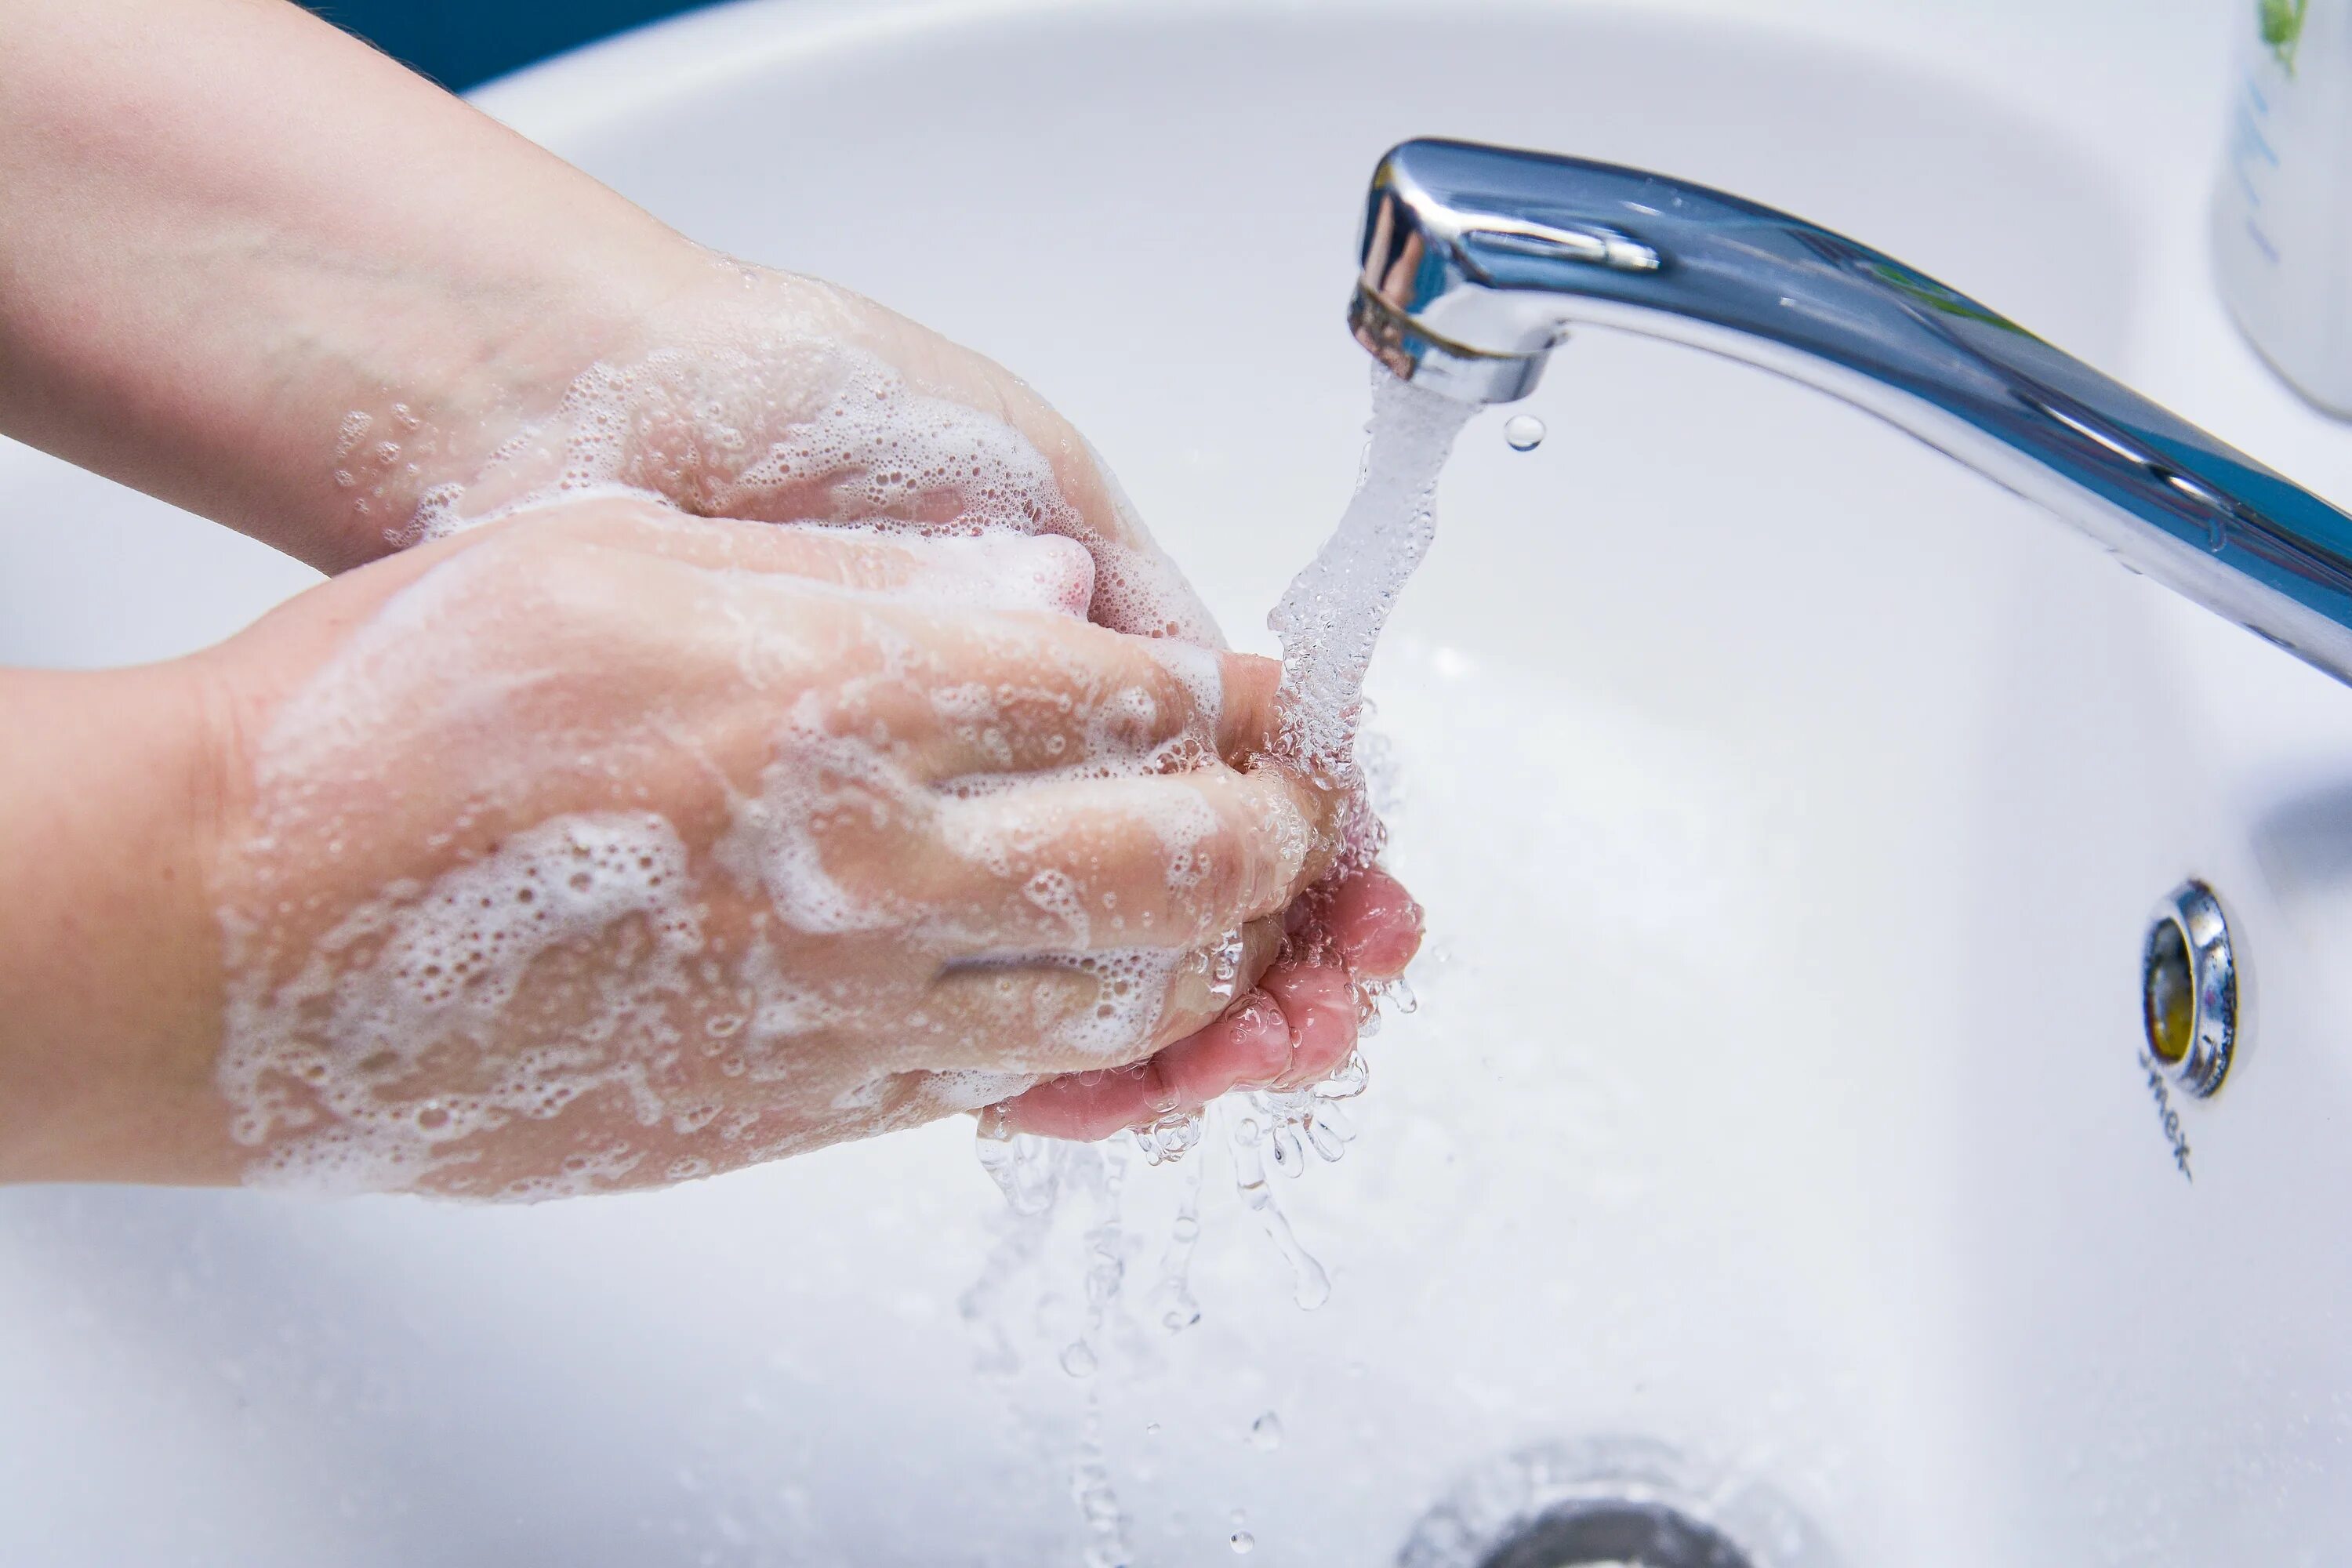 Мытье рук. Мытье рук с мылом. Вымойте руки с мылом. Мыло для рук. Шампунь моет без воды